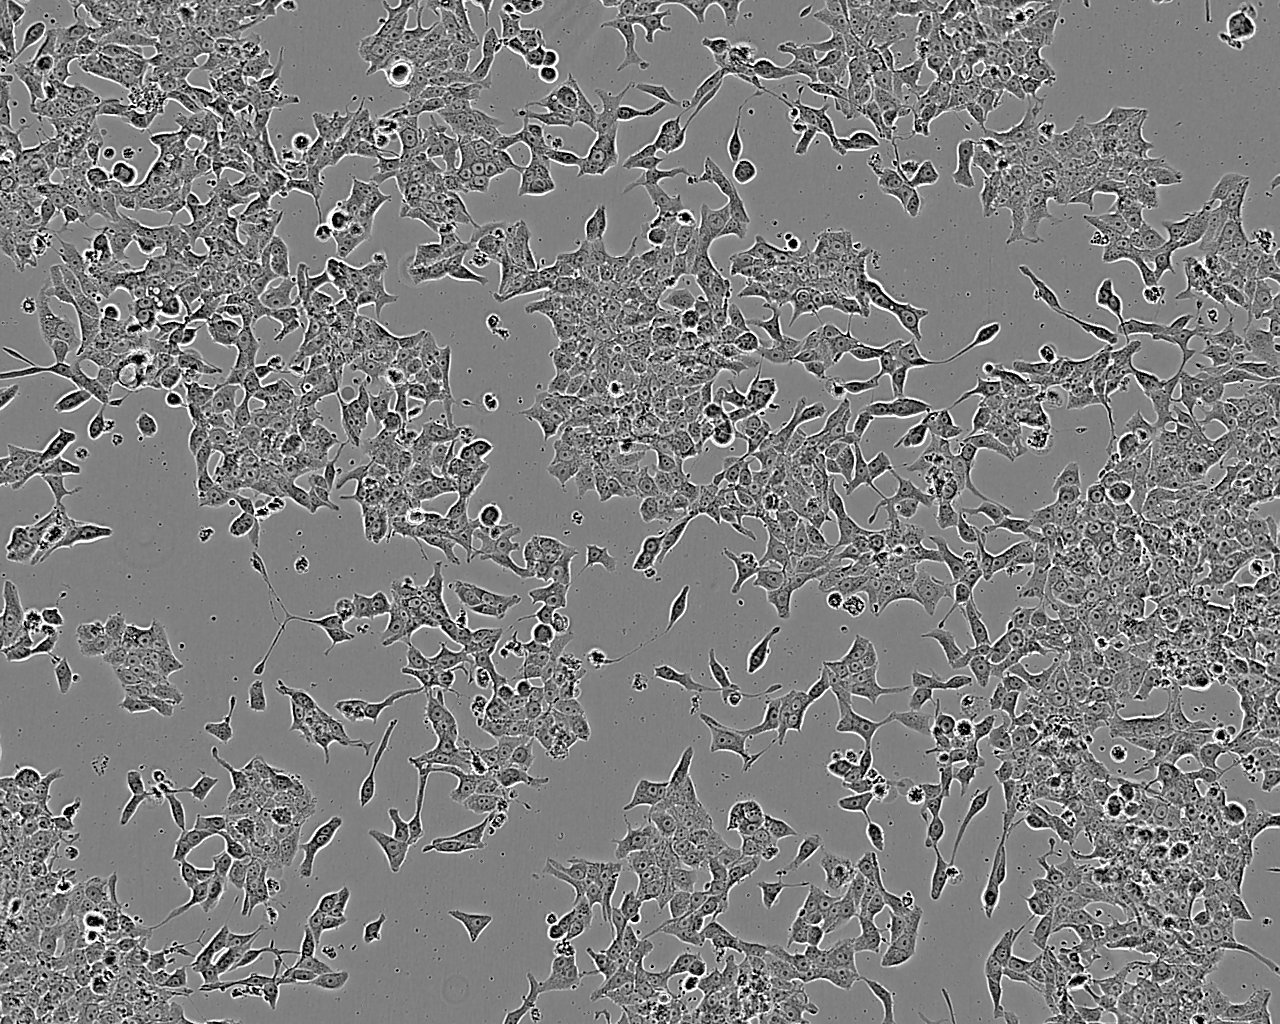 A101D epithelioid cells人黑色素瘤细胞系,A101D epithelioid cells